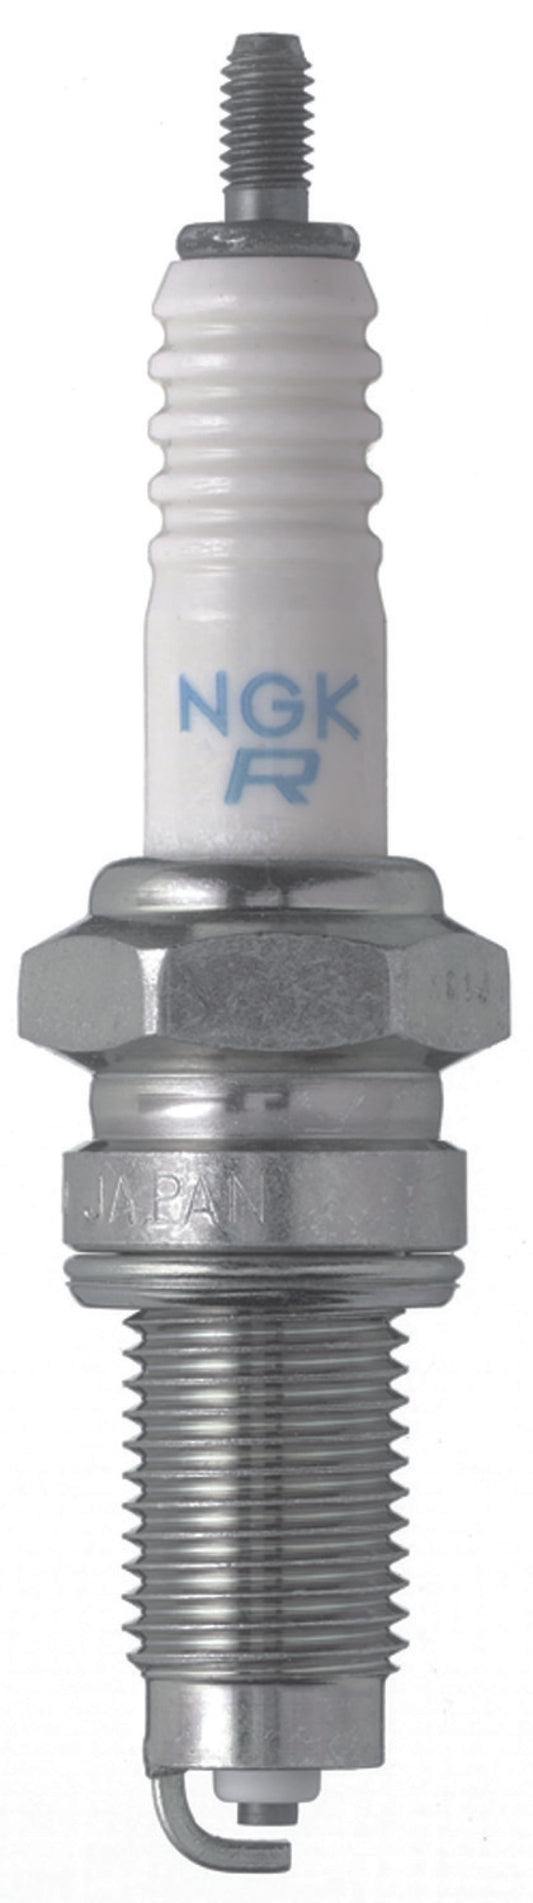 NGK Standard Spark Plug Box of 10 (DPR9Z)